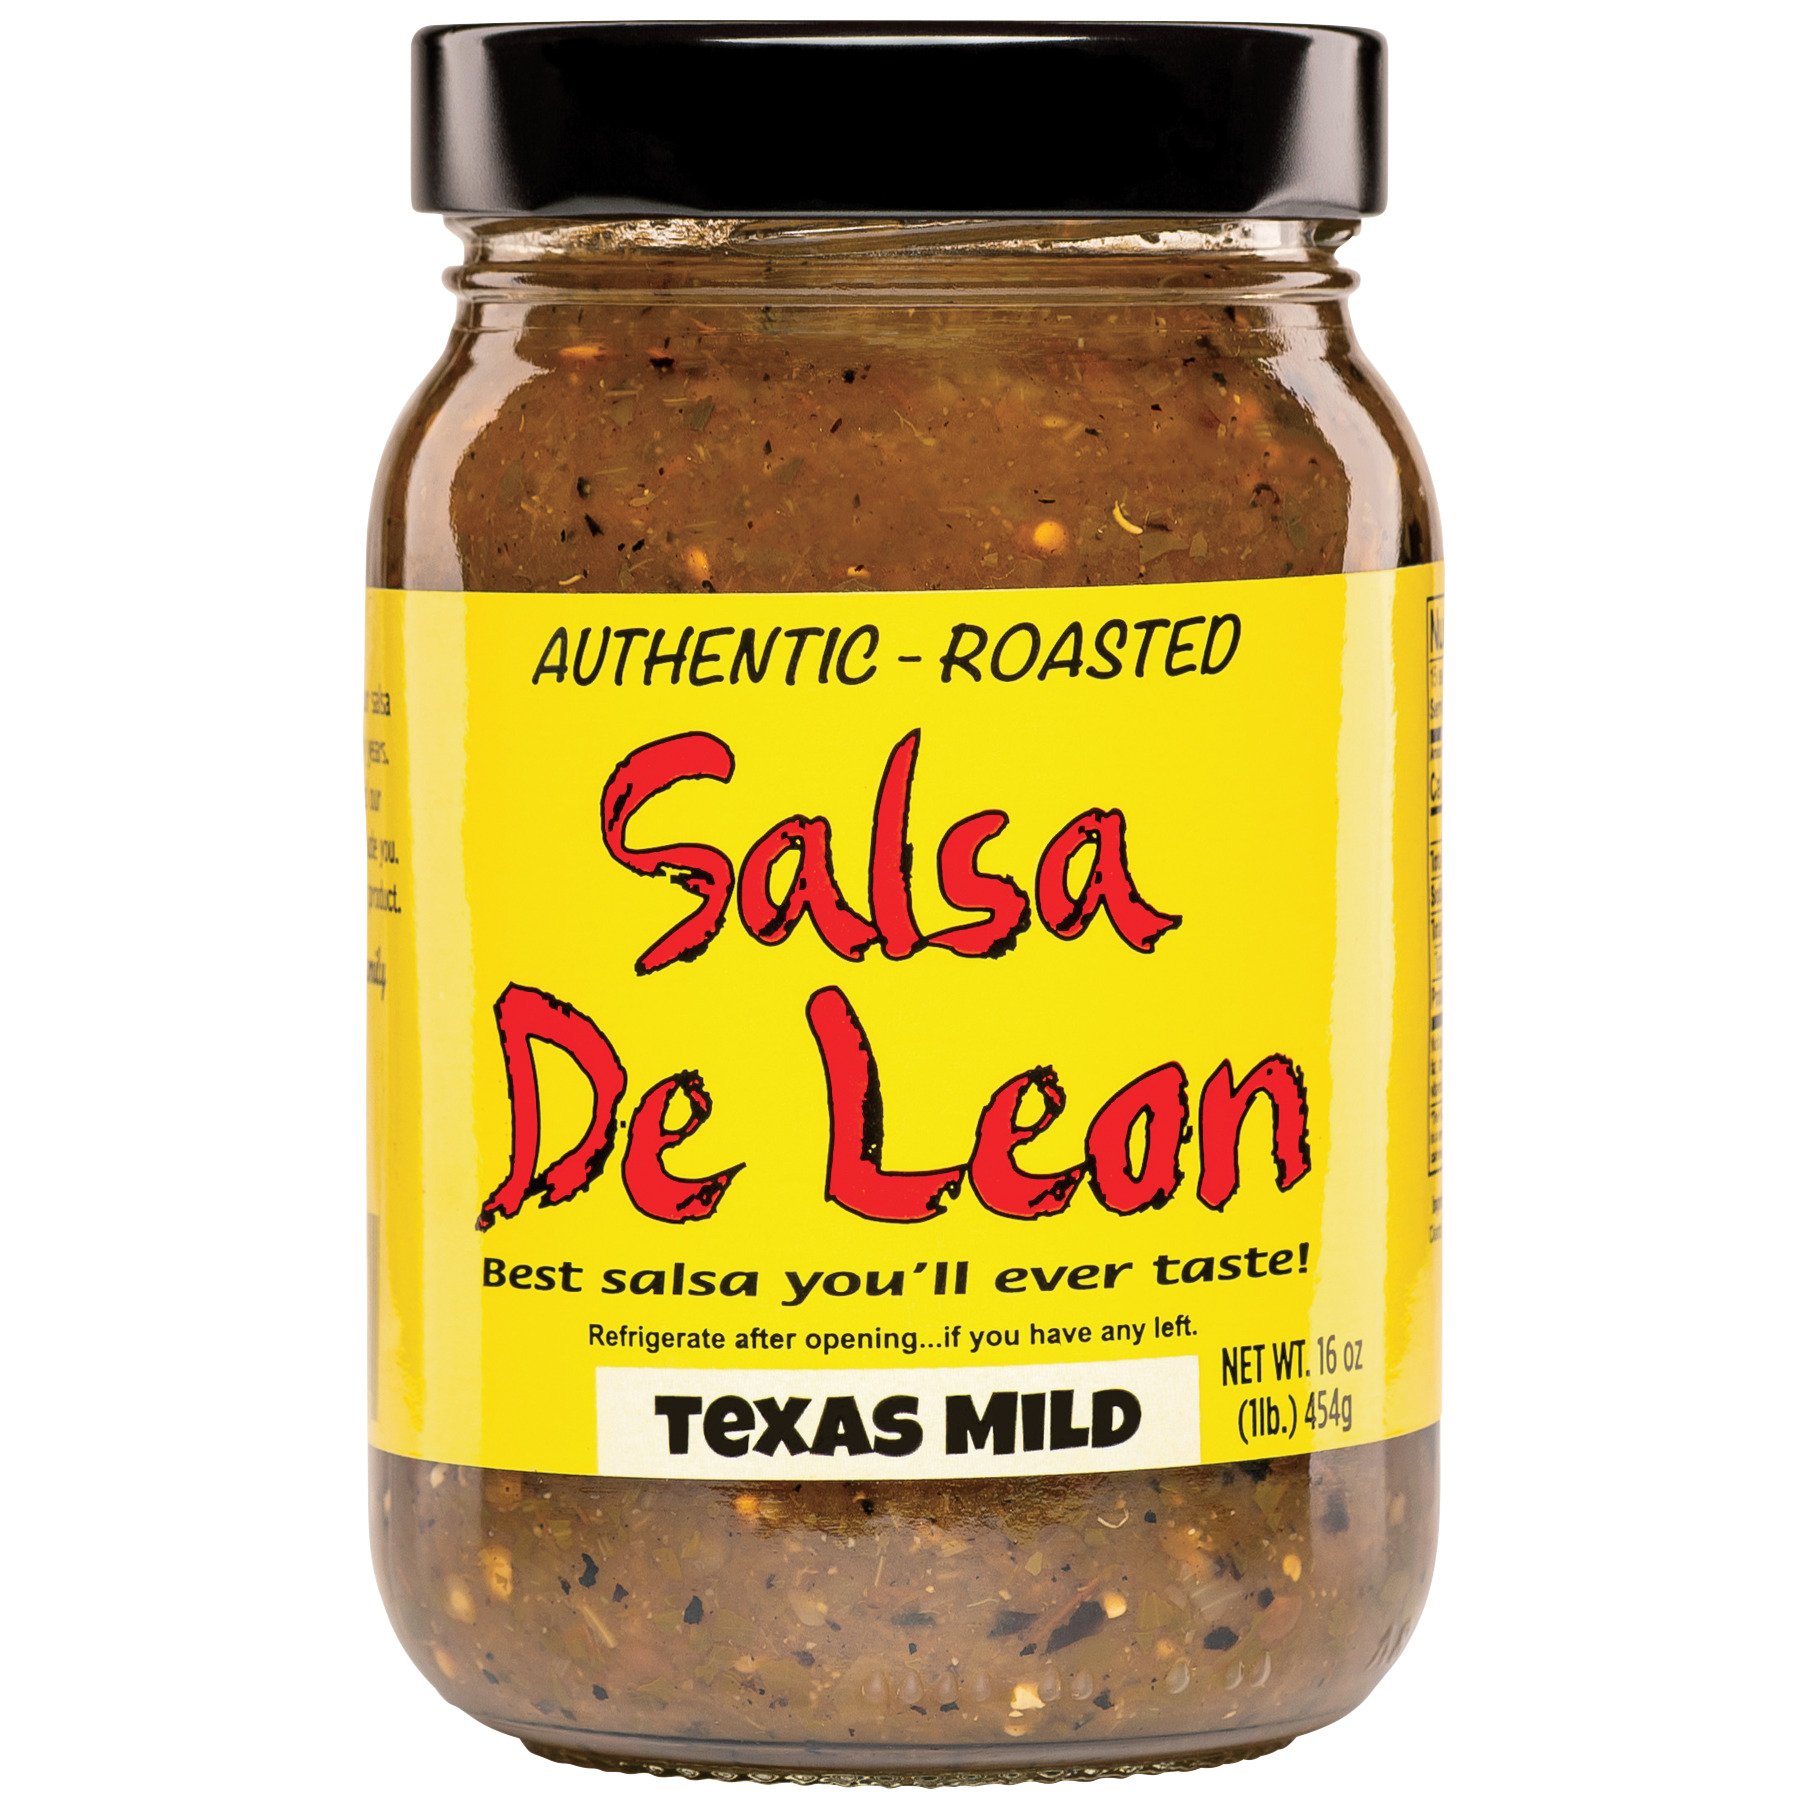 Salsa De Leon Salsa - Texas Mild